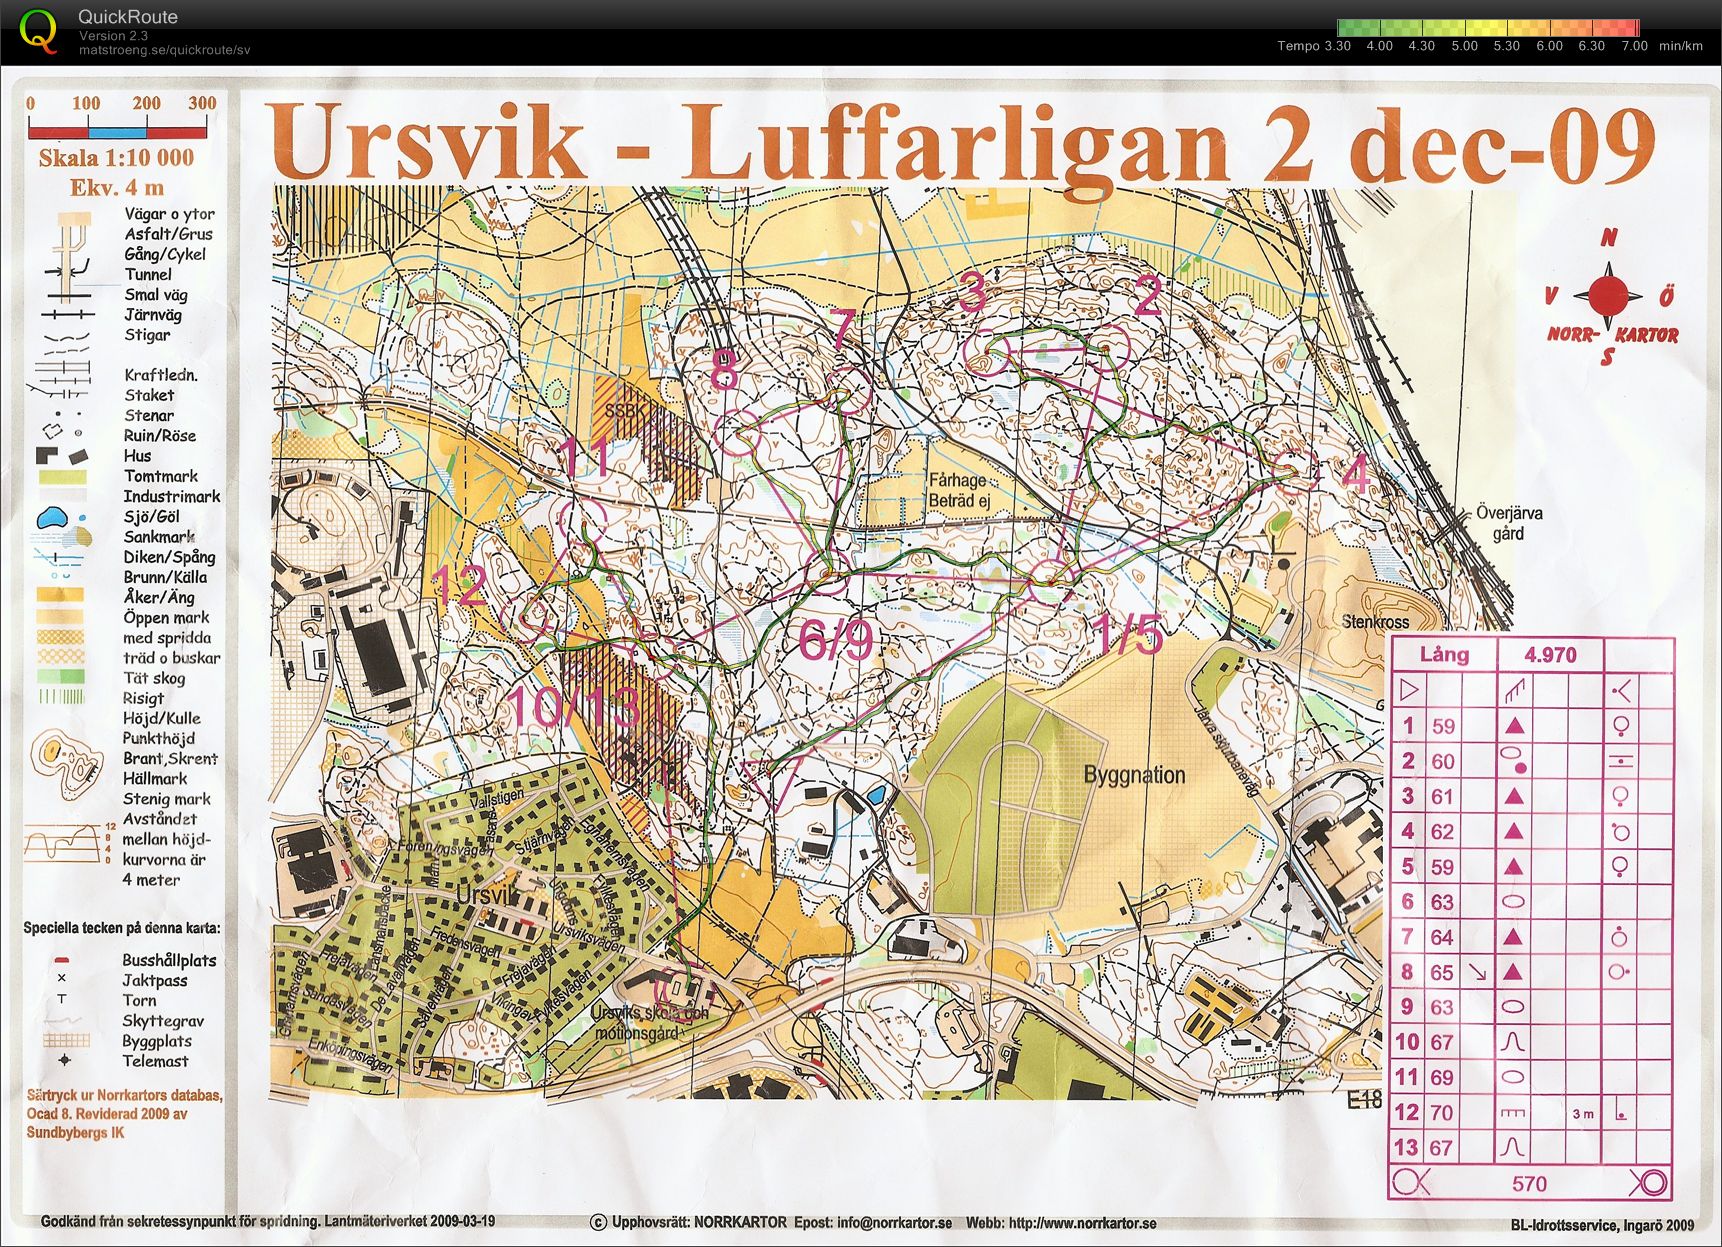 Luffarligan Ursvik (2009-12-02)